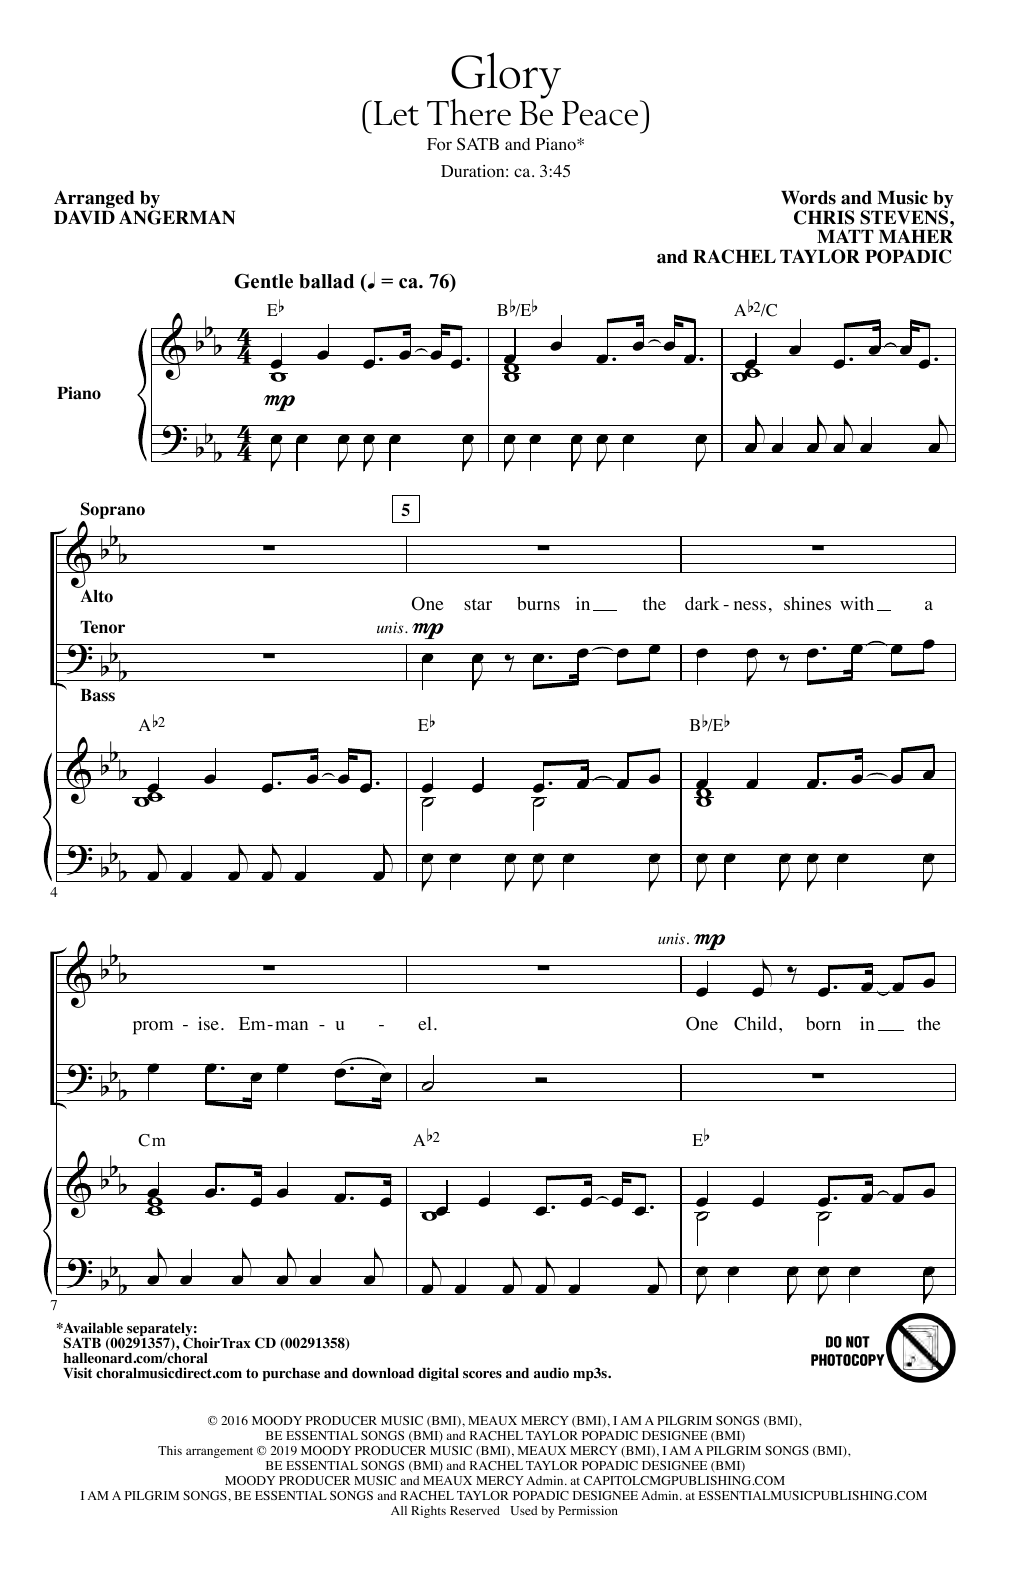 Chris Stevens, Matt Maher & Rachel Popadic Glory (Let There Be Peace) (arr. David Angerman) Sheet Music Notes & Chords for SATB Choir - Download or Print PDF